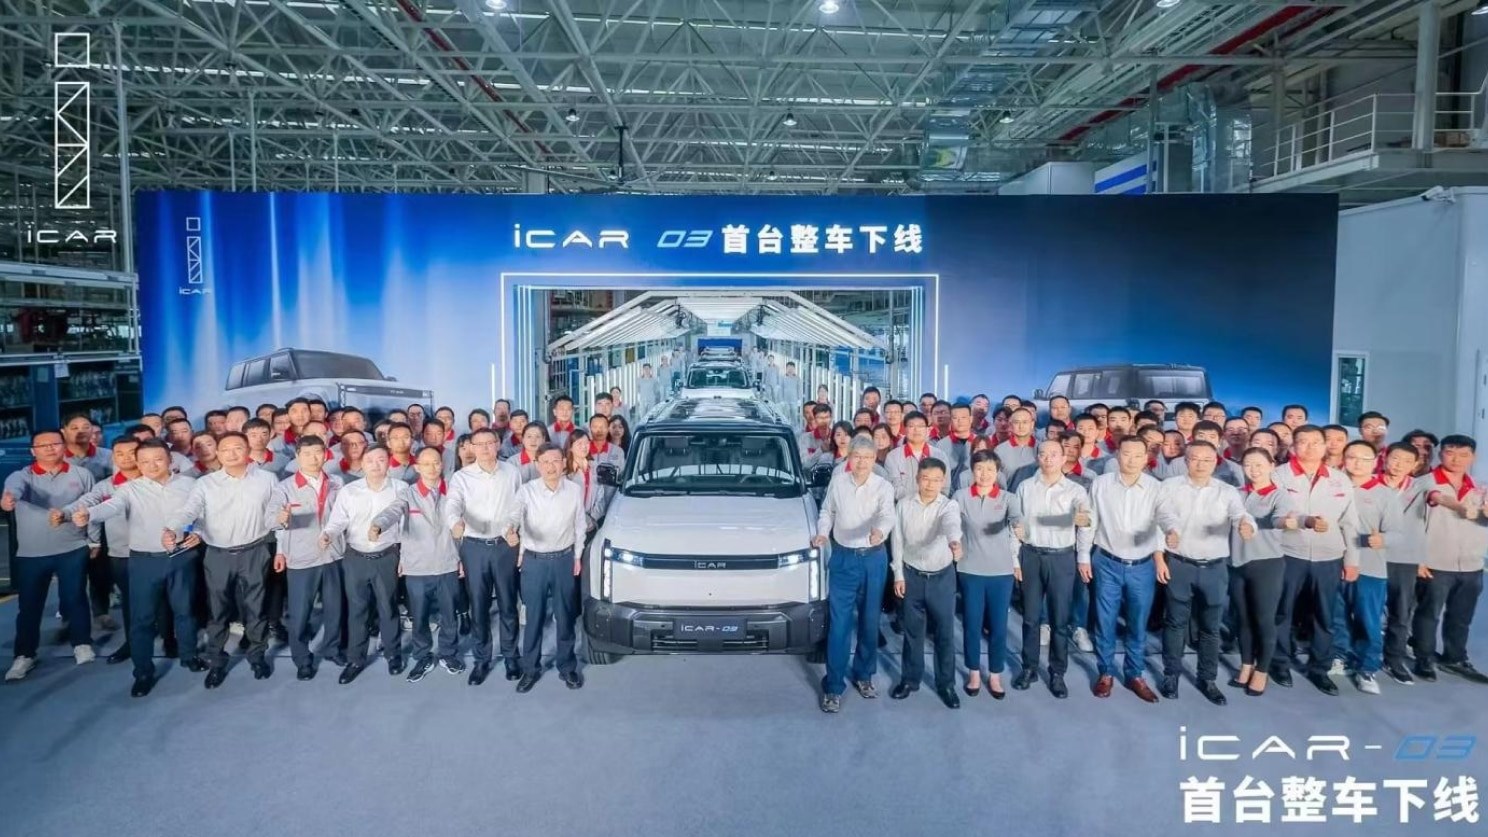 Chery iCar 03 elektrikli SUV, Çin'de üretime girdi